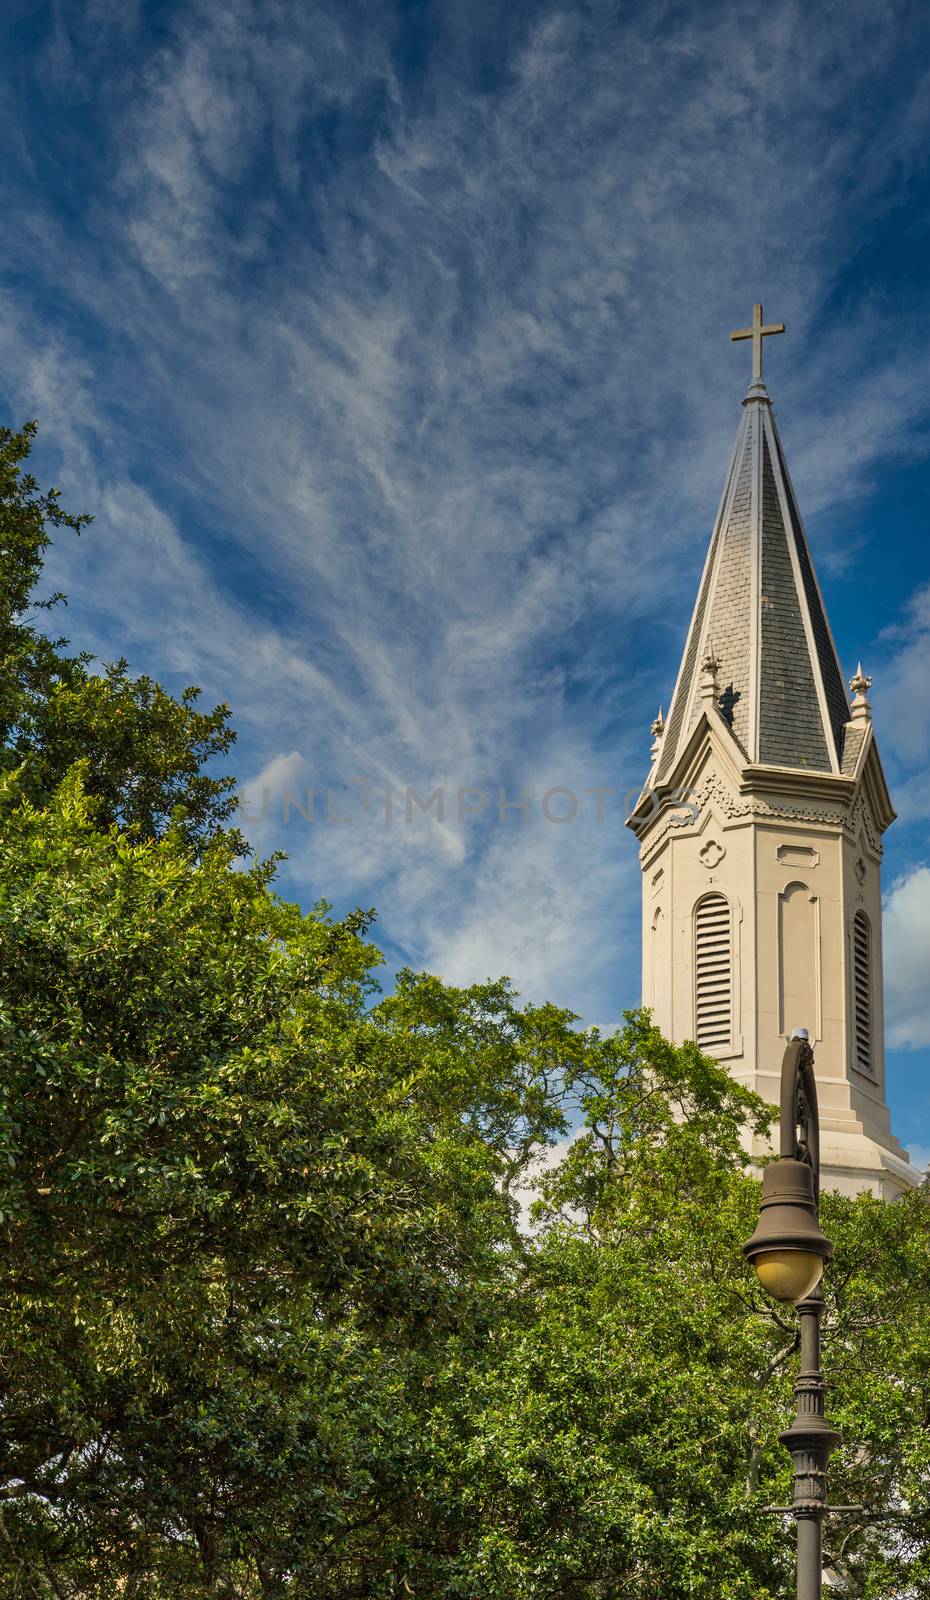 Savannah Church Steeple Over Trees by dbvirago